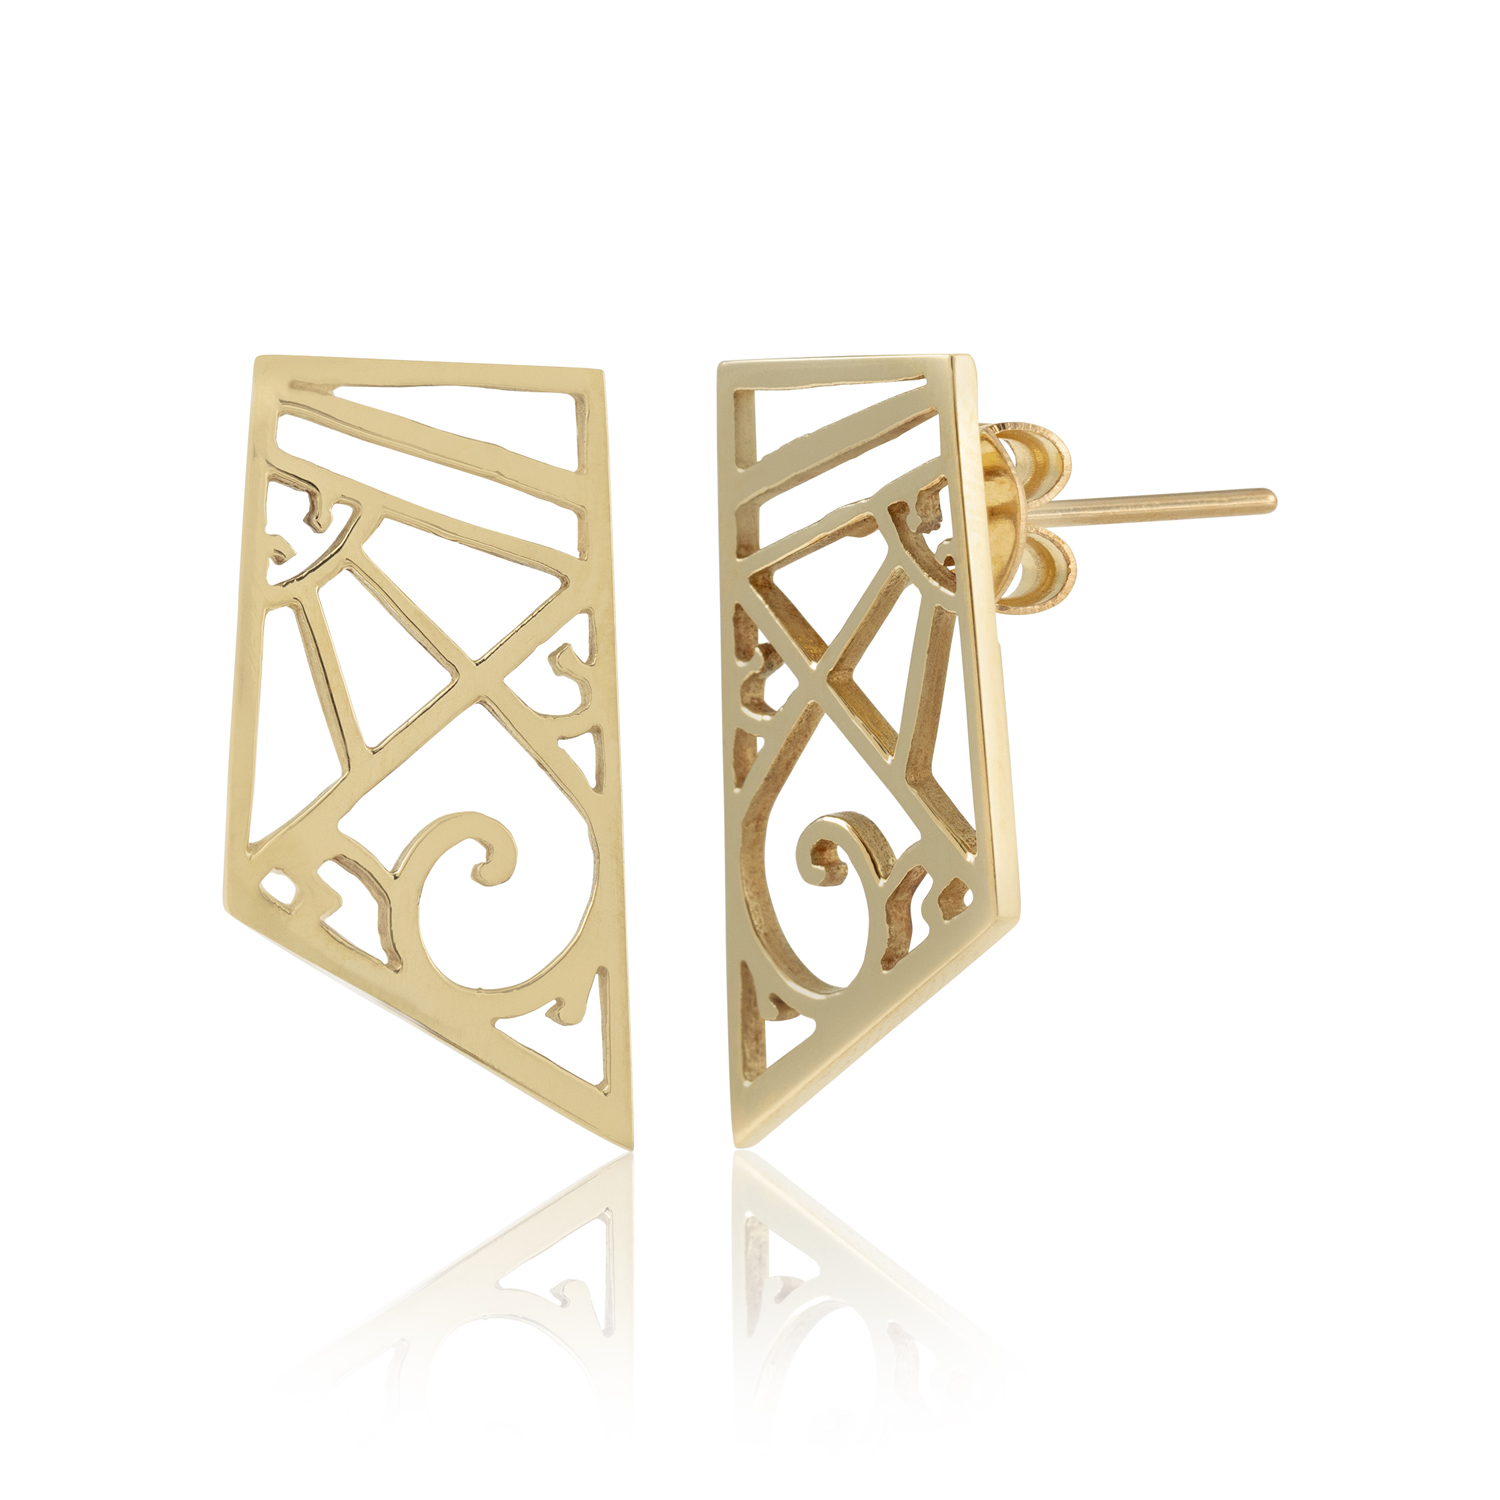 Gold Modernism earrings